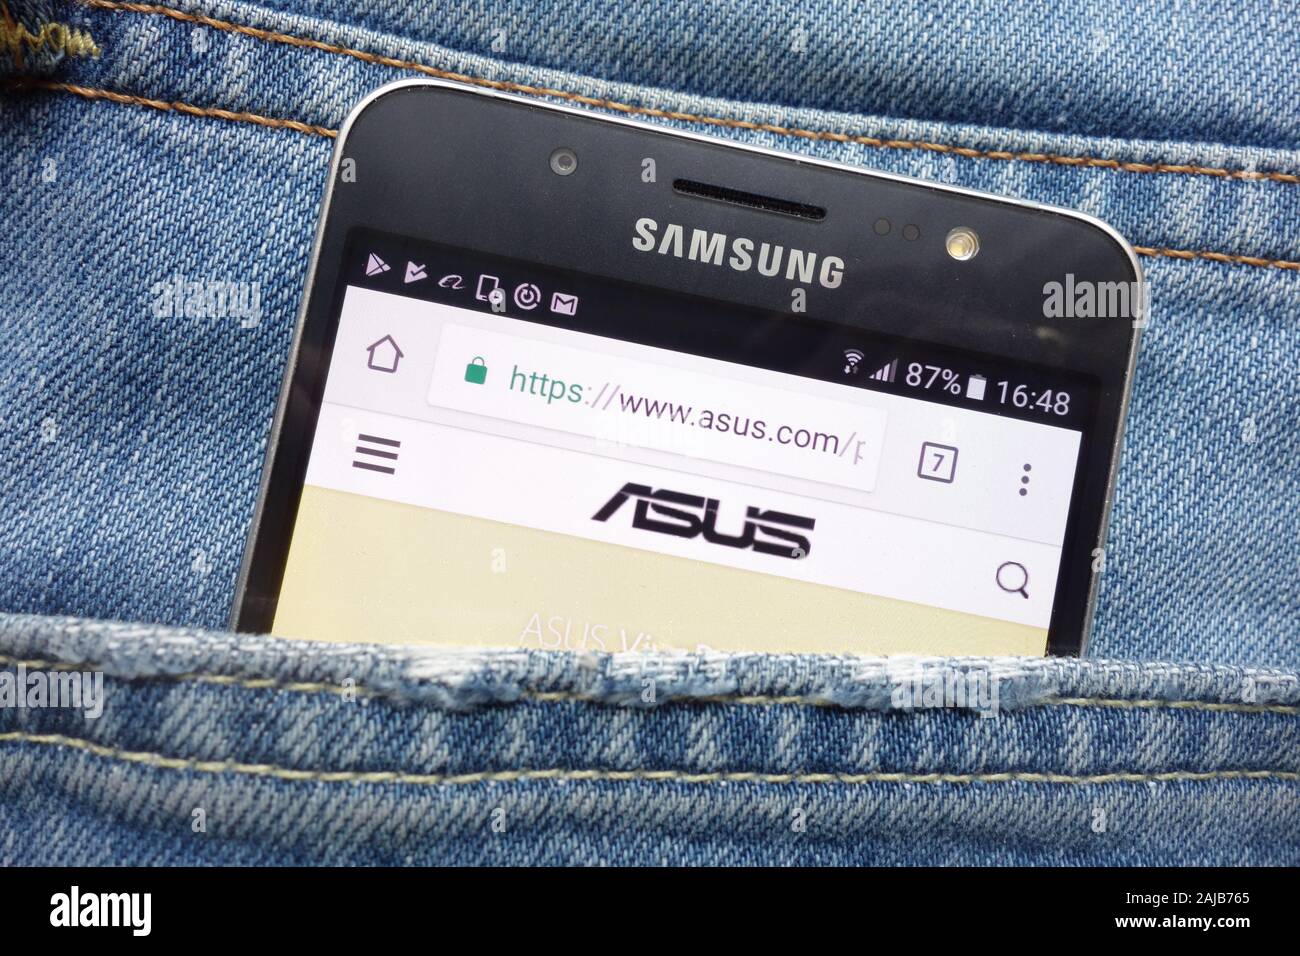 Asus website displayed on Samsung smartphone hidden in jeans pocket Stock  Photo - Alamy